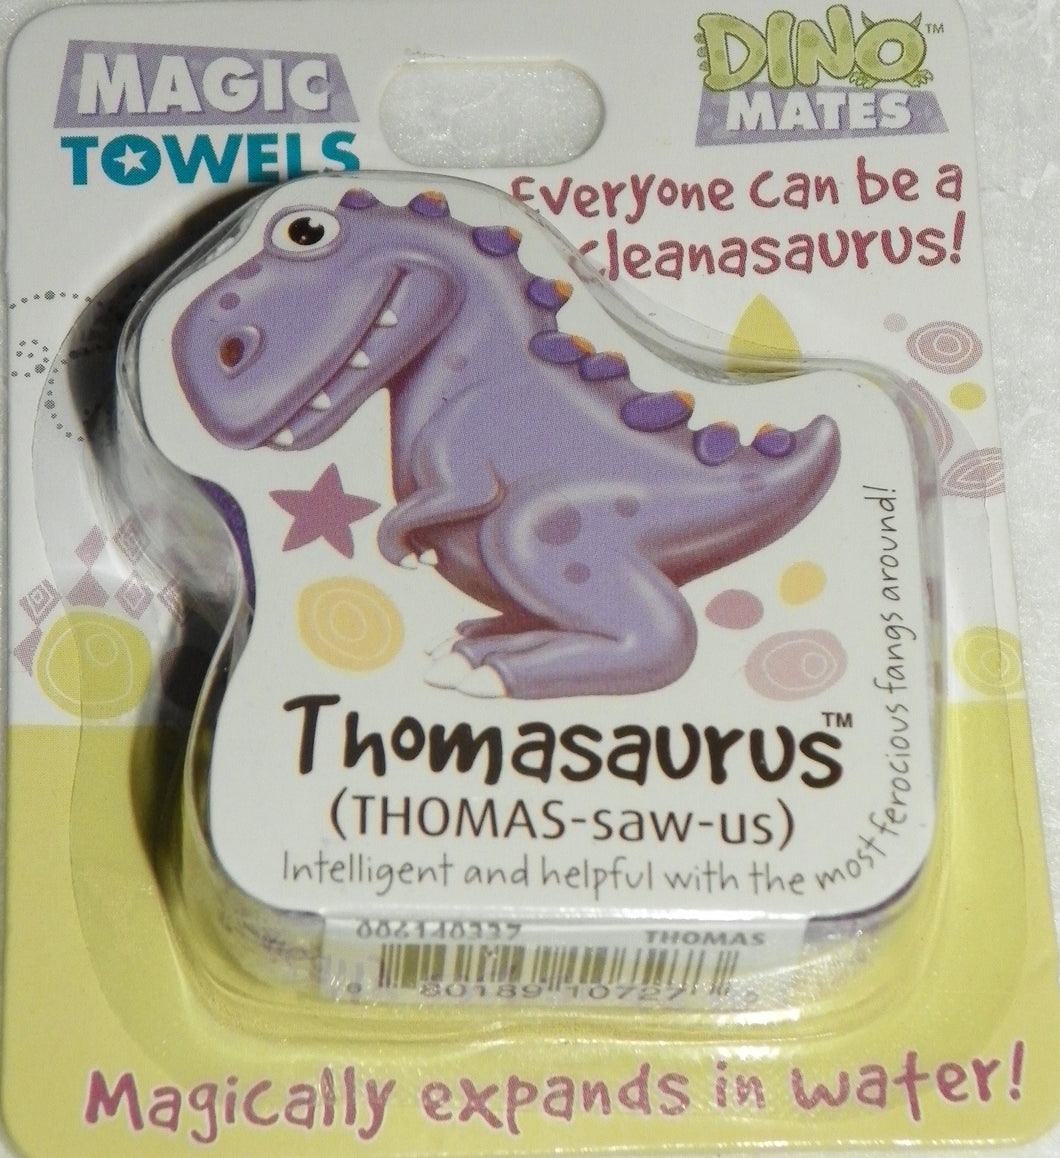 Dinomatic Magic Towel-Thomasaurus